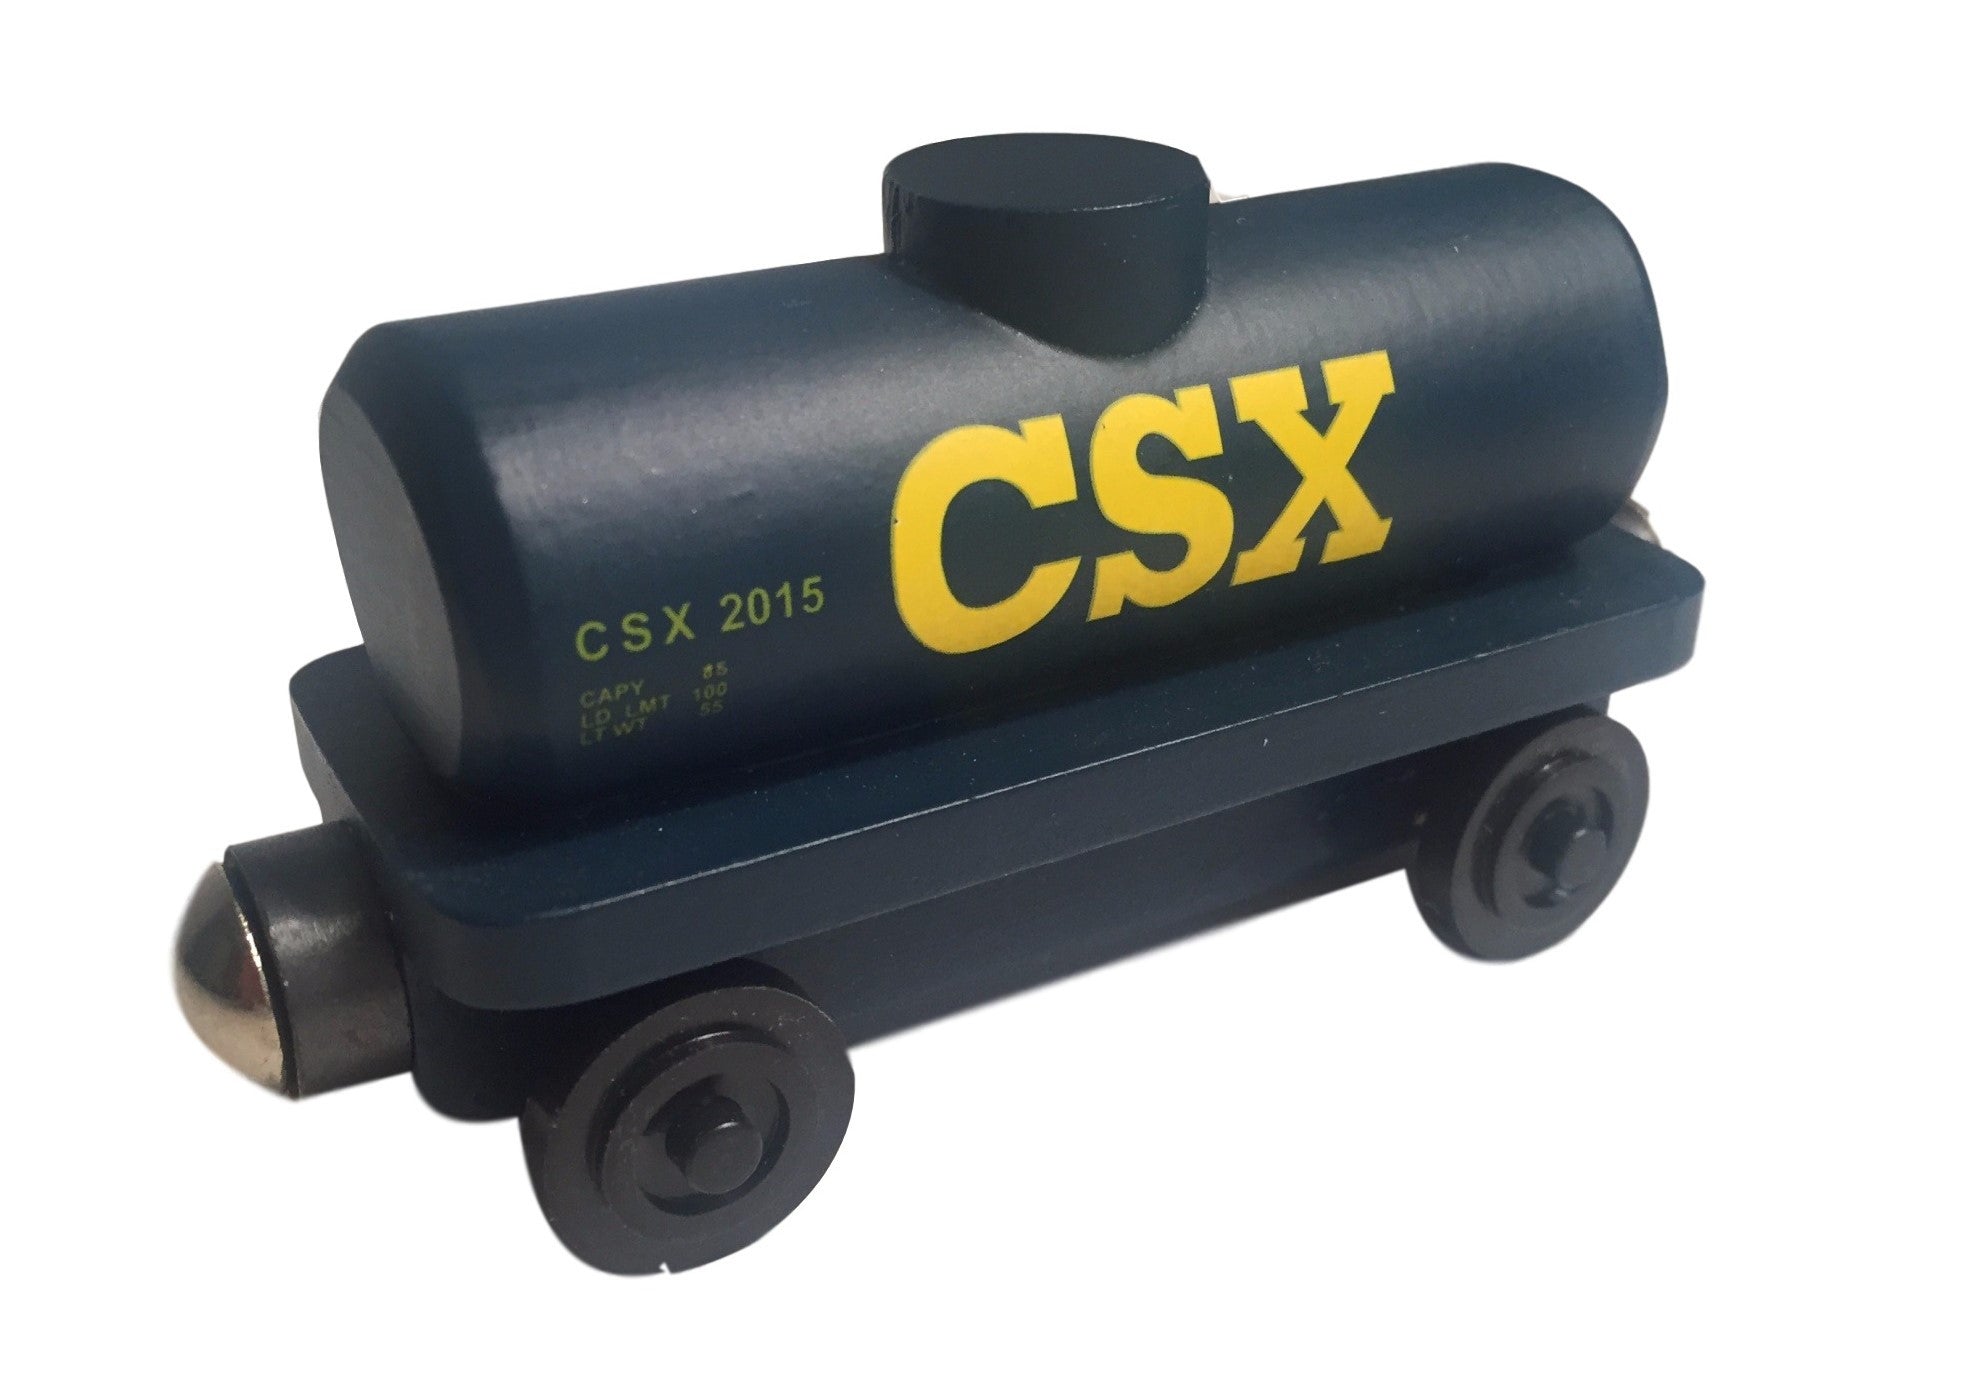 Whittle Shortline Railroad CSX Tanker Car Wooden Toy Train